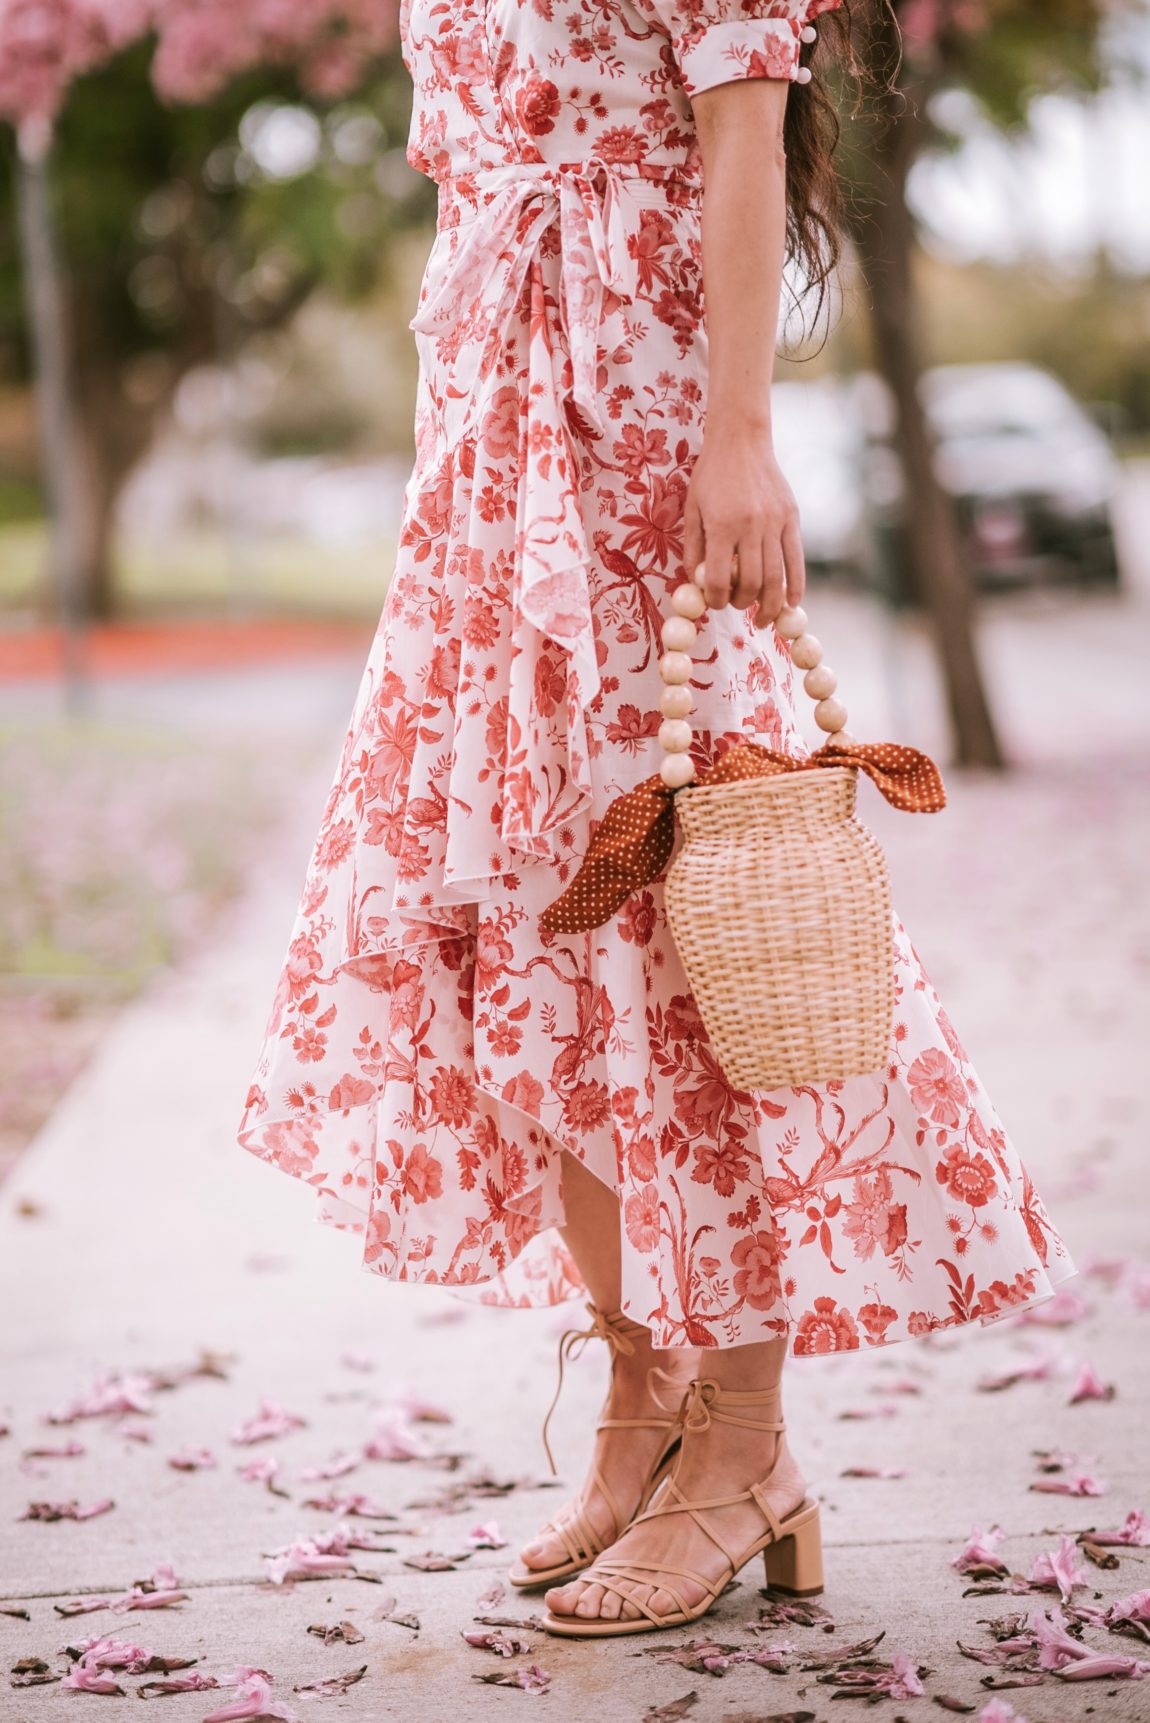 Favorite Spring Floral Dress & Accessories | Hallie Daily